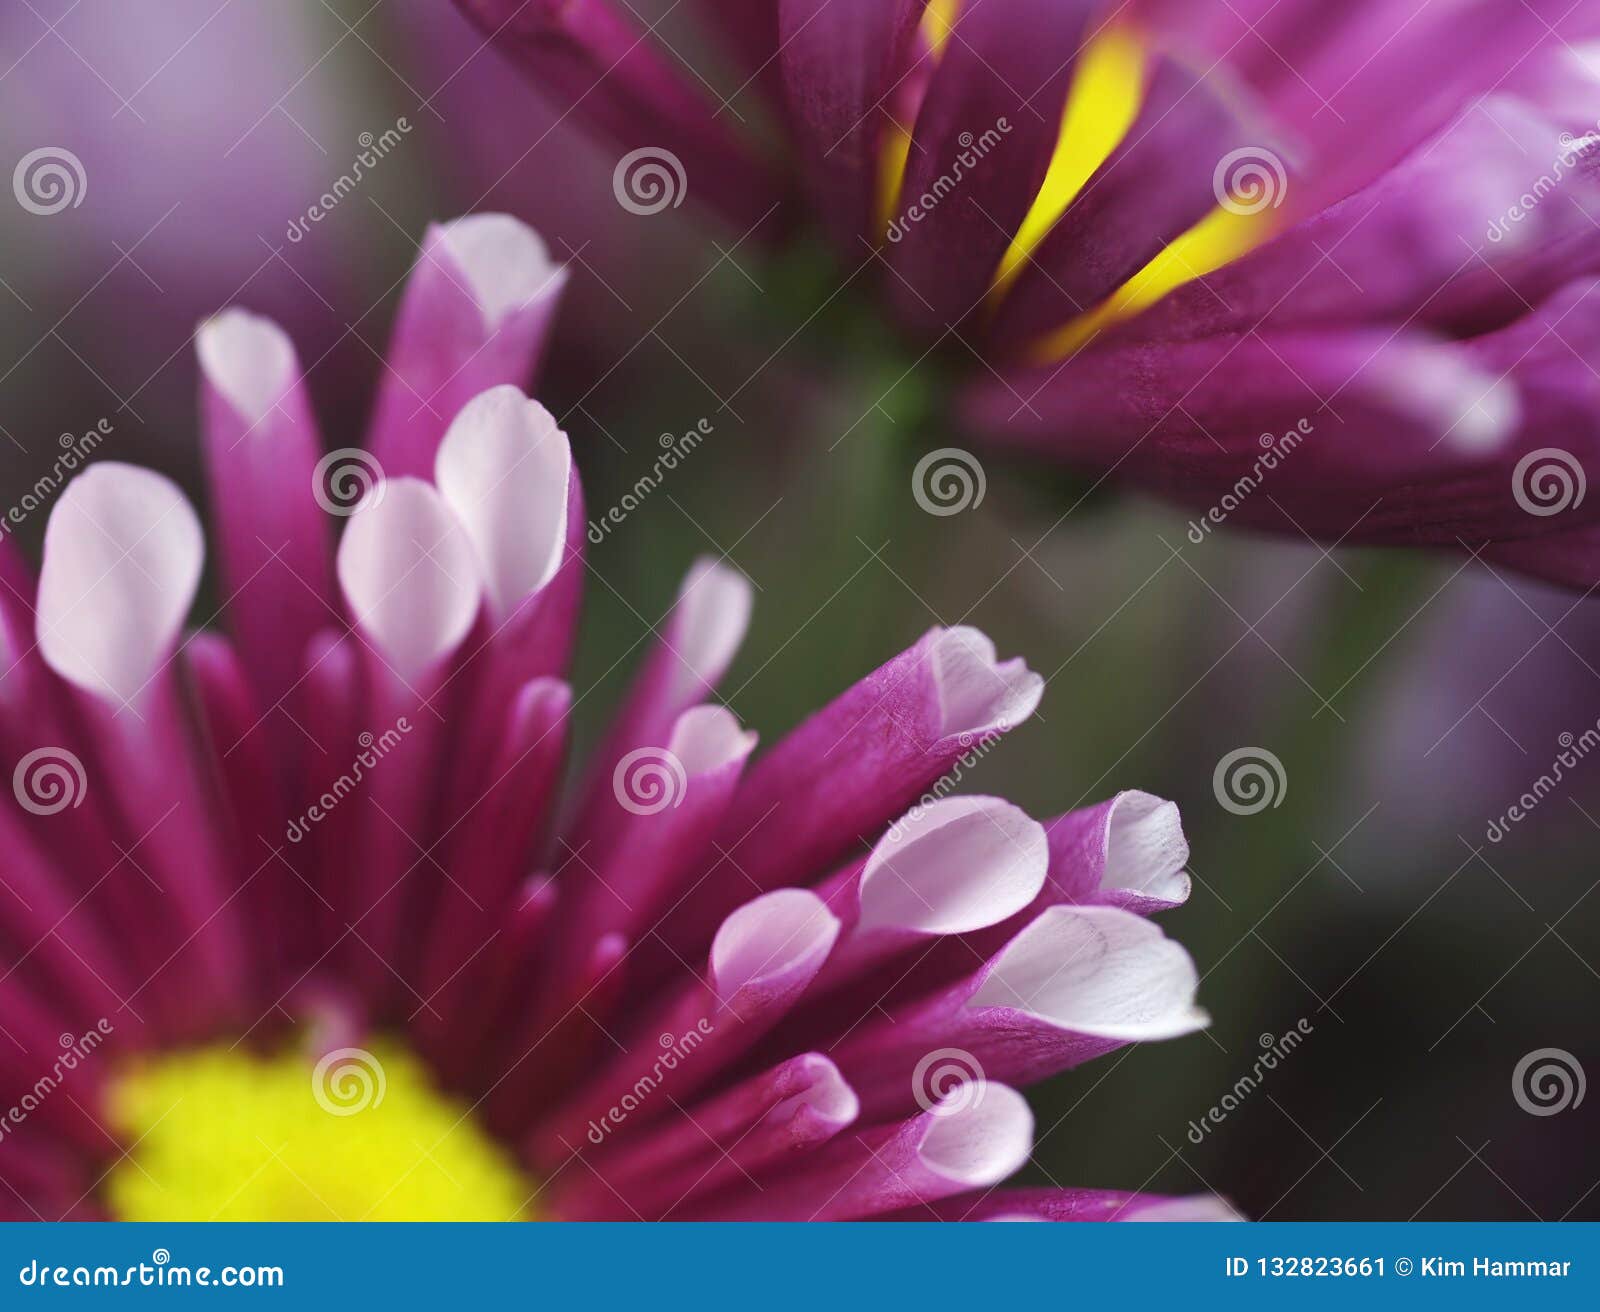 A Macro View Of A Blooming Chrysanthemum Or Pom Pom Mum Petal Edges Stock Image Image Of Flowering Hammar 132823661